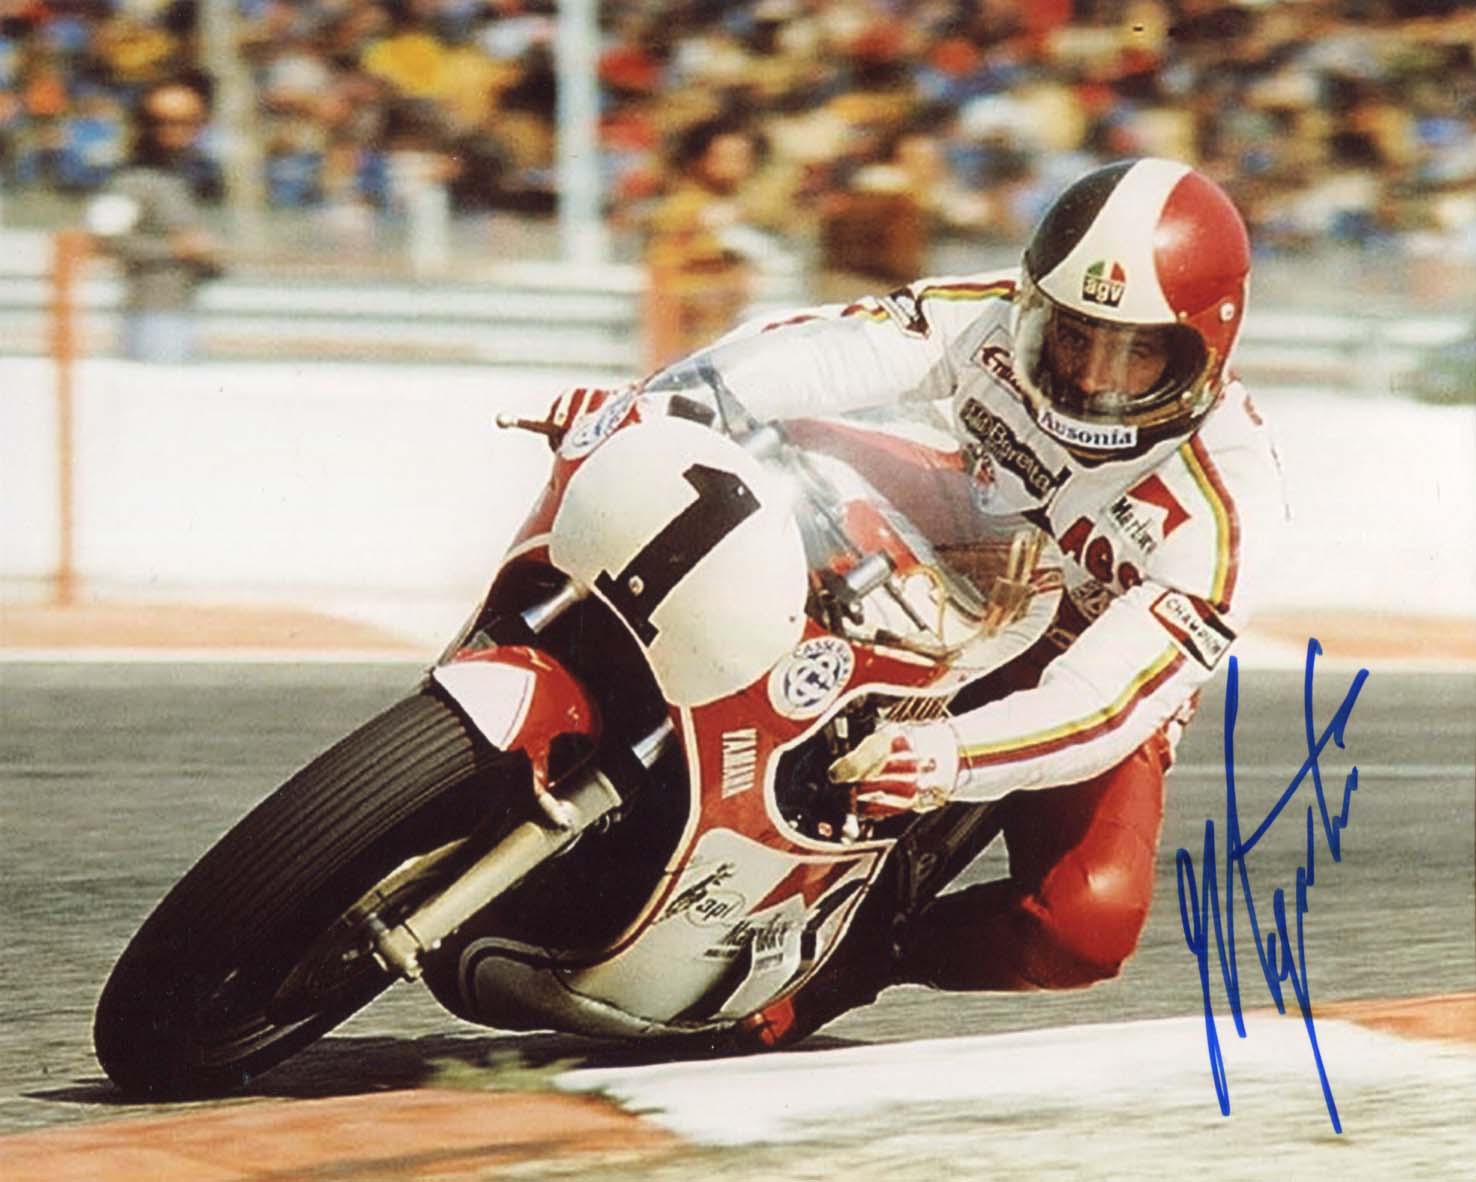 Giacomo Agostini Autograph Autogramm | ID 7587938500757